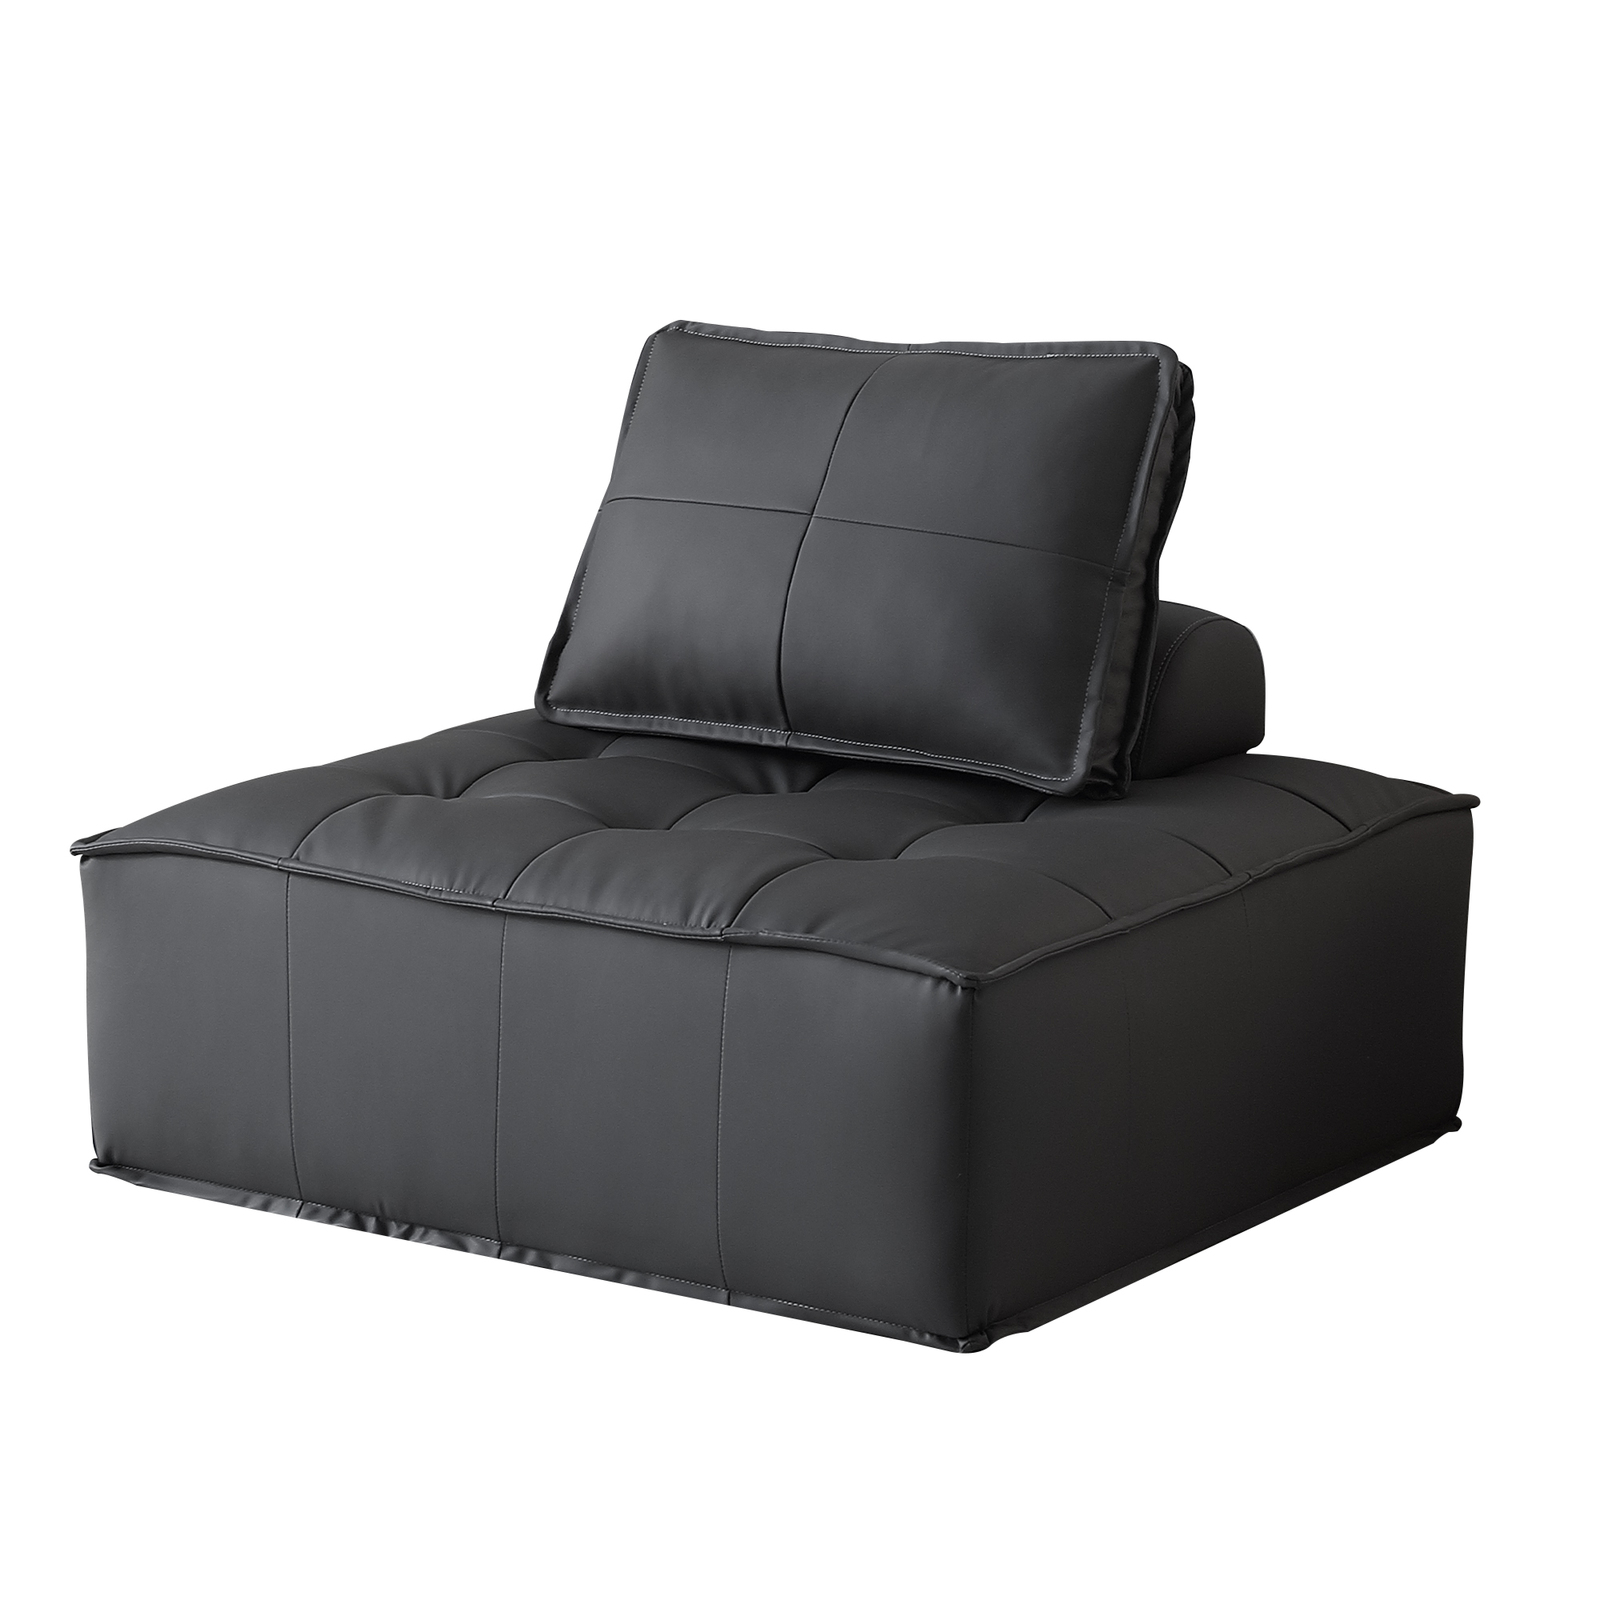 1pc Large Modular Sofa Lounge Chair Tofu Sofa Armless Seat PU Leather Couch Seat - Black